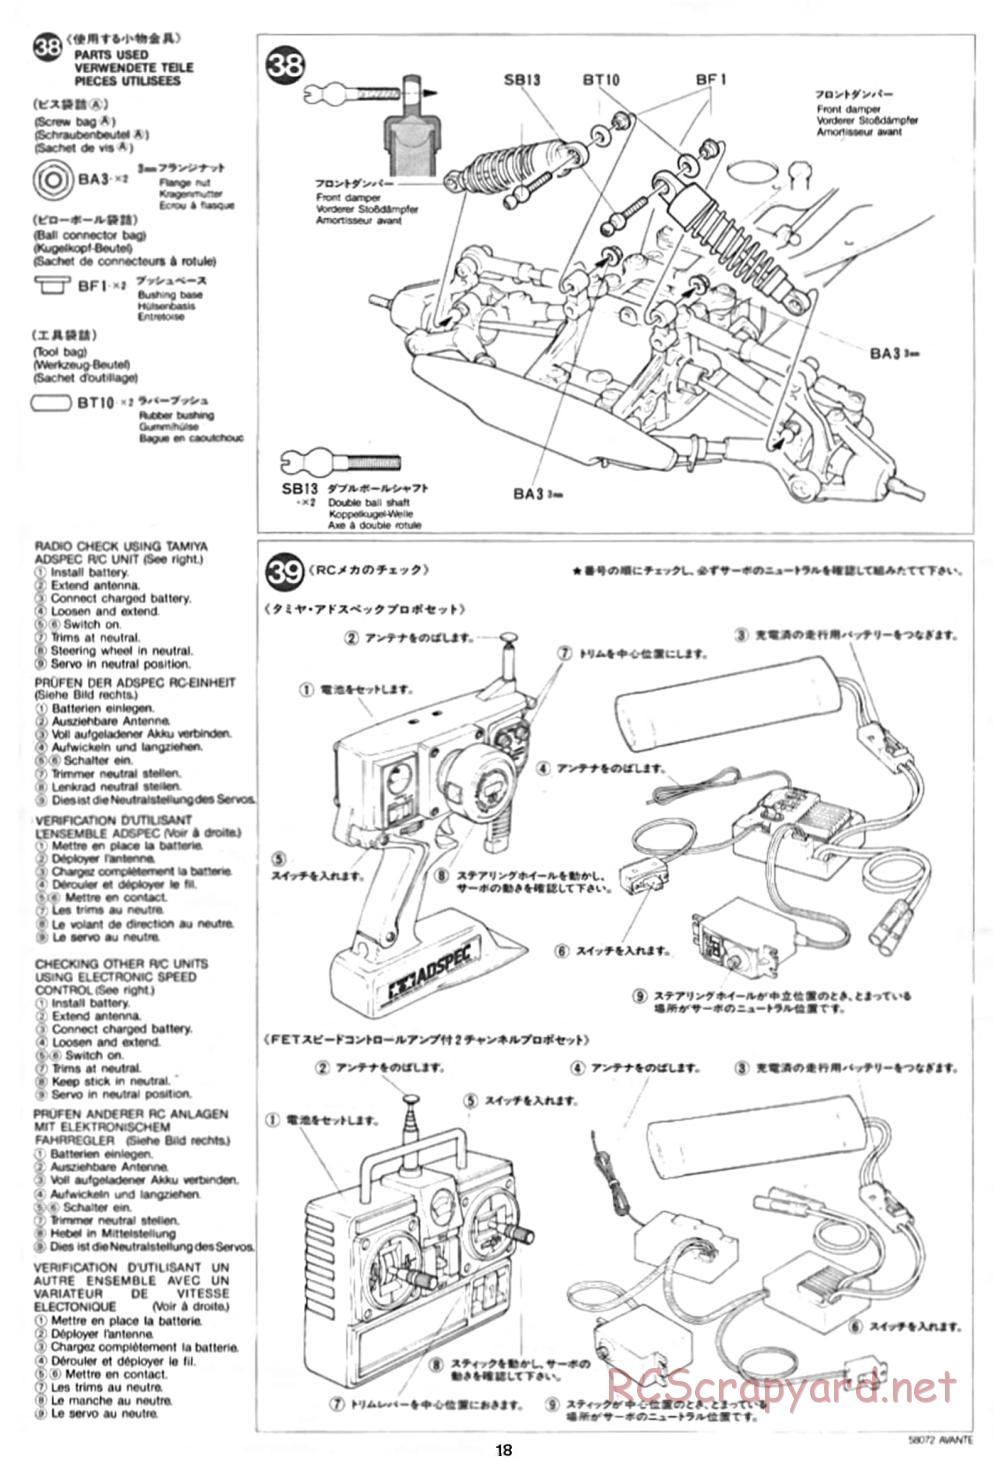 Tamiya - Avante - 58072 - Manual - Page 18